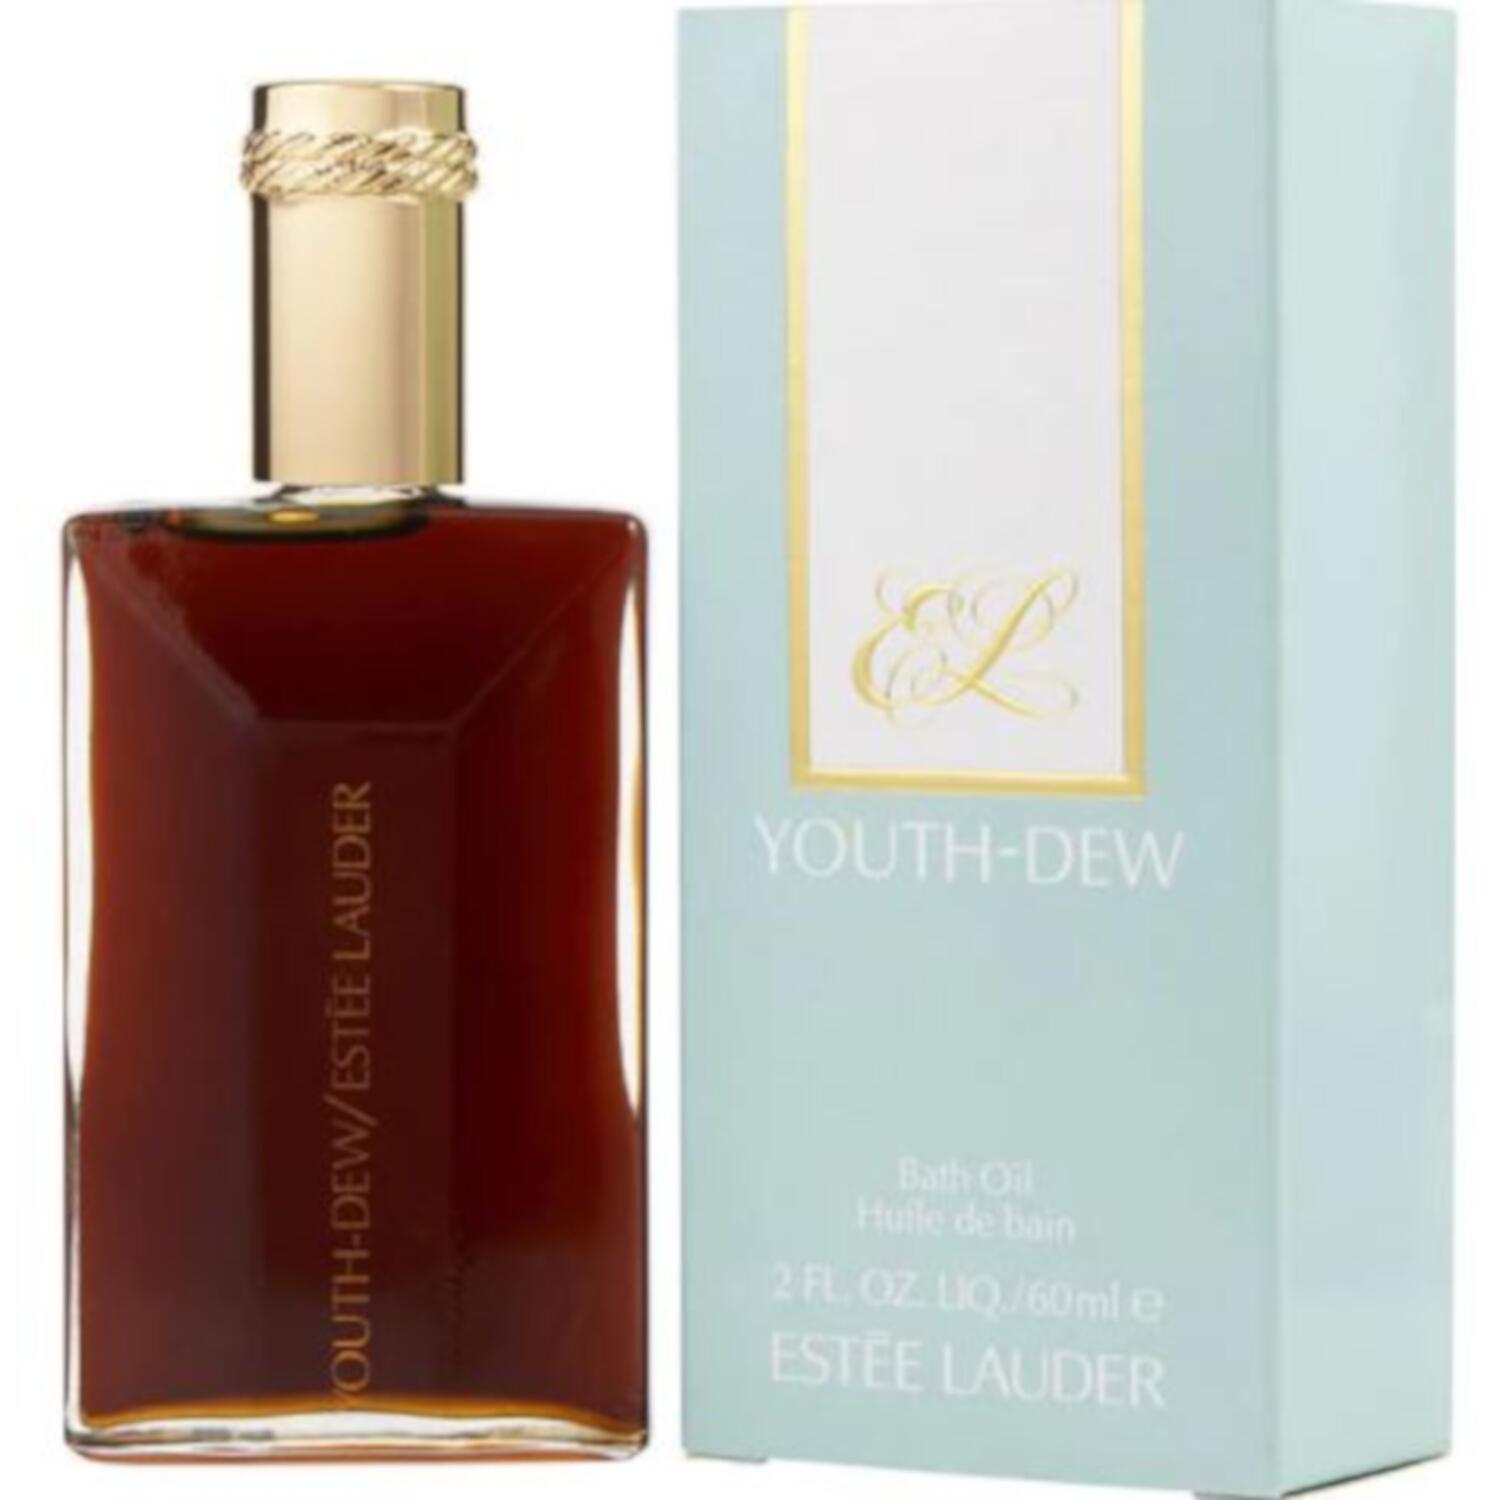 Perfume Youth-Dew Bath Oil de Estee Lauder 60 ml EDP